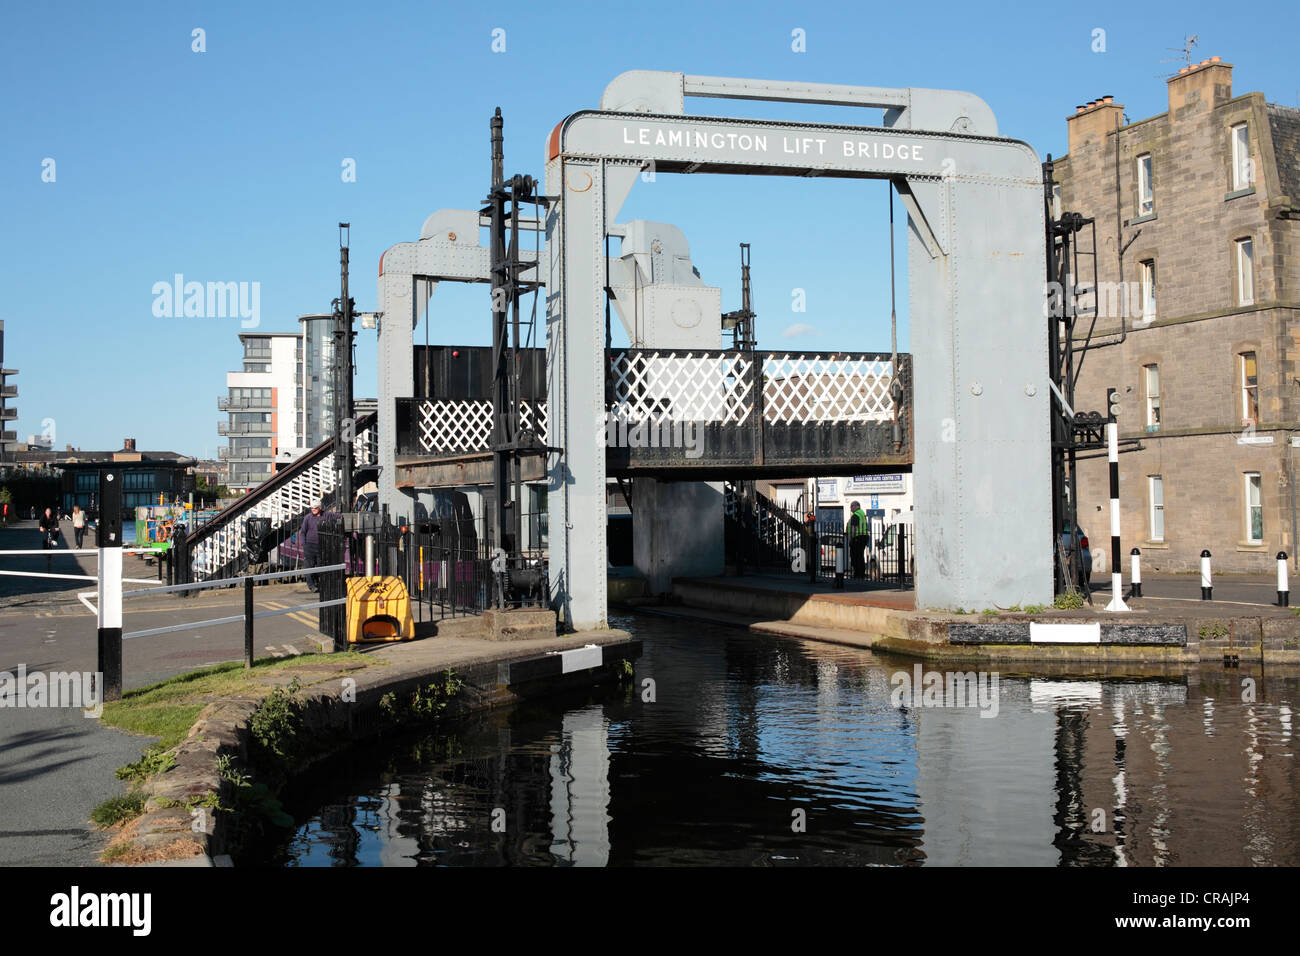 Leamington lift bridge in the raised position on Edinburghs Union canal Stock Photo